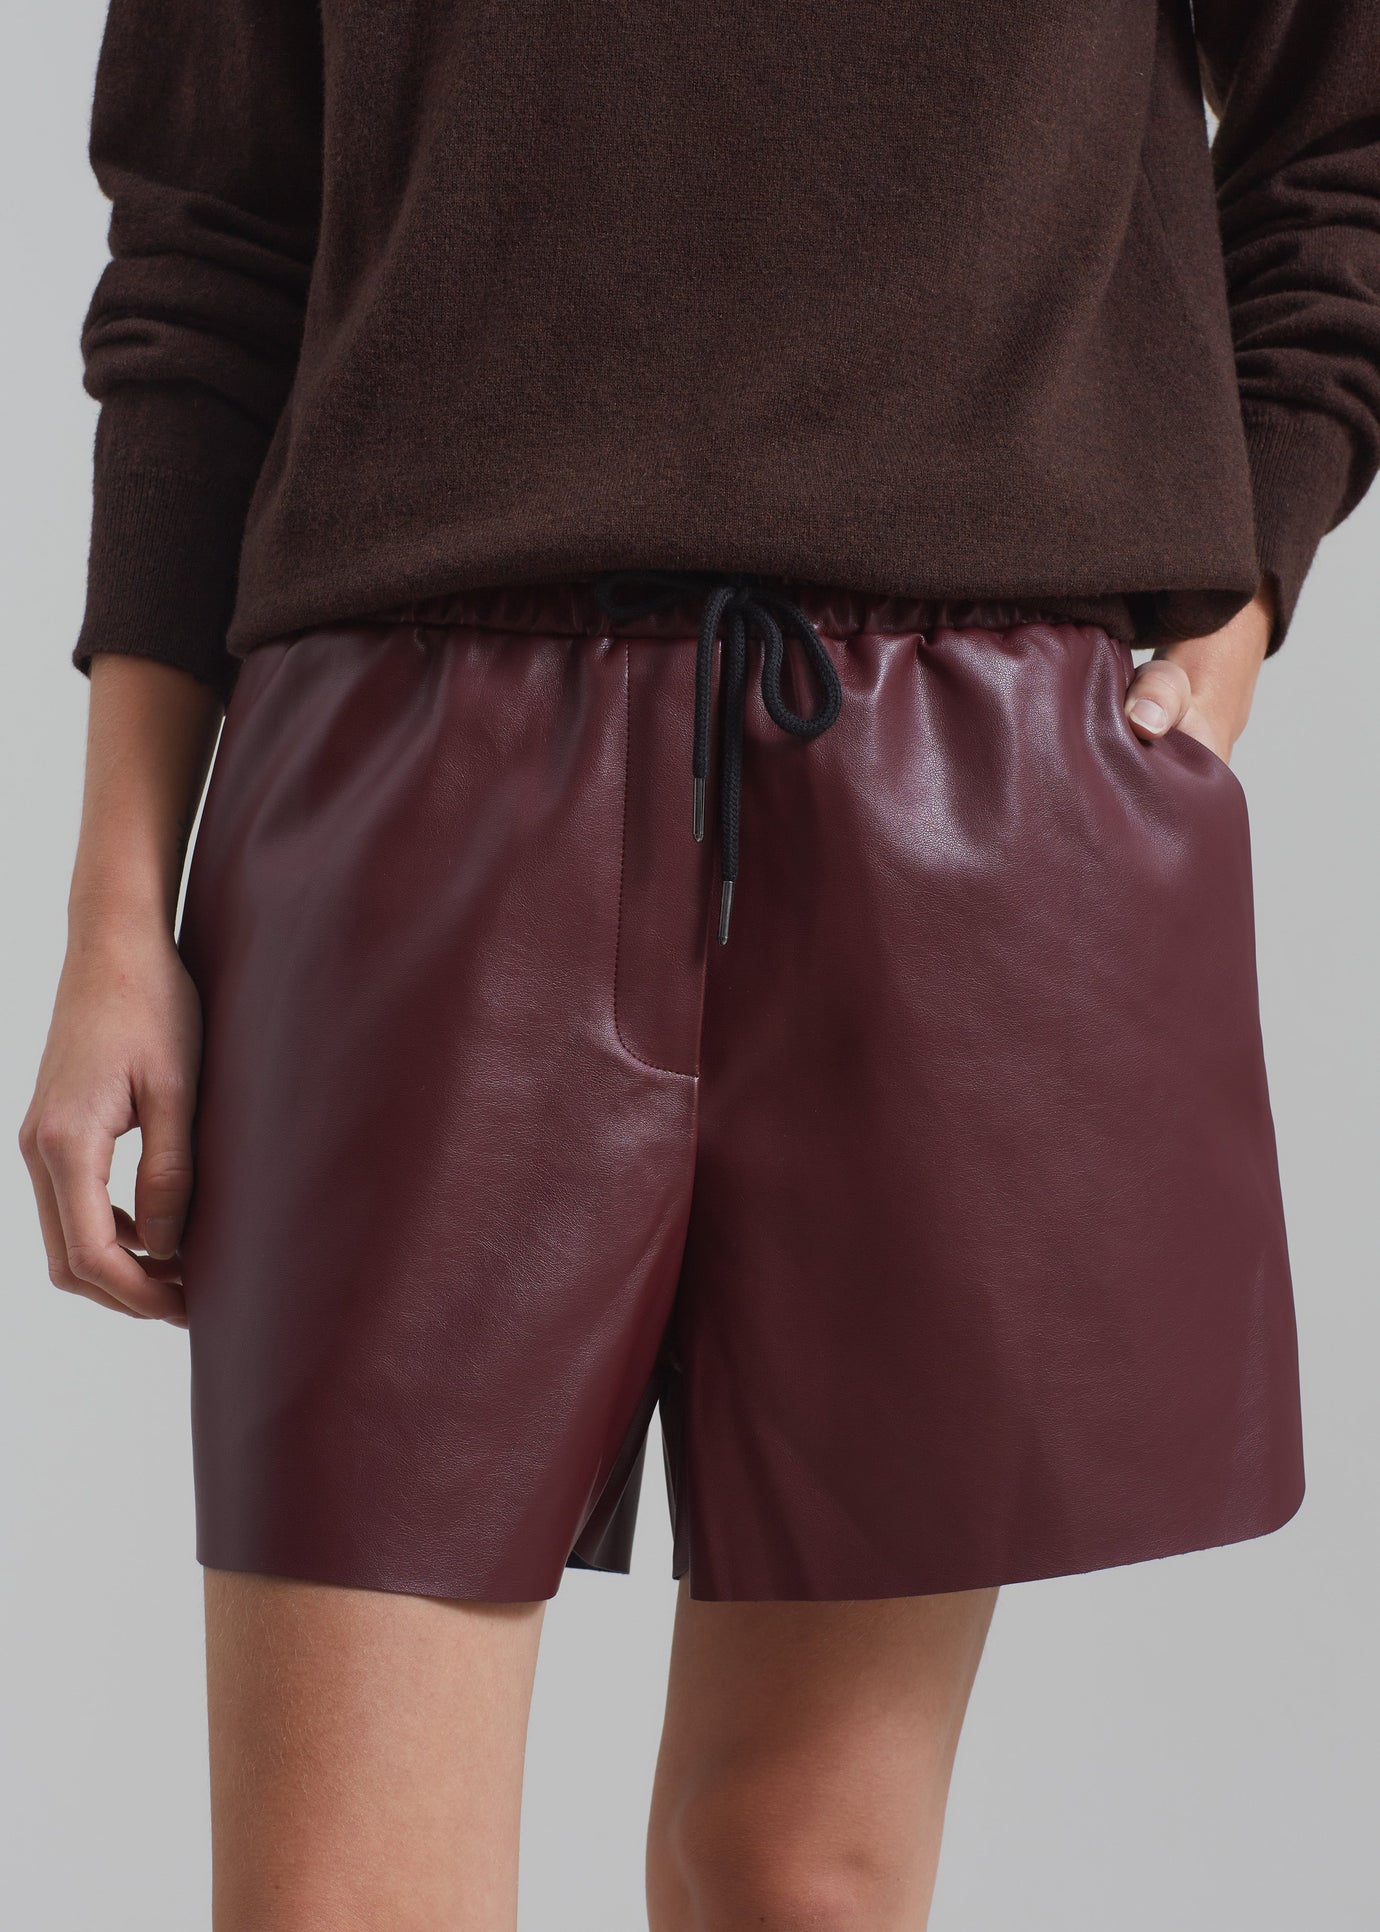 Kine Faux Leather Shorts - Burgundy - 1